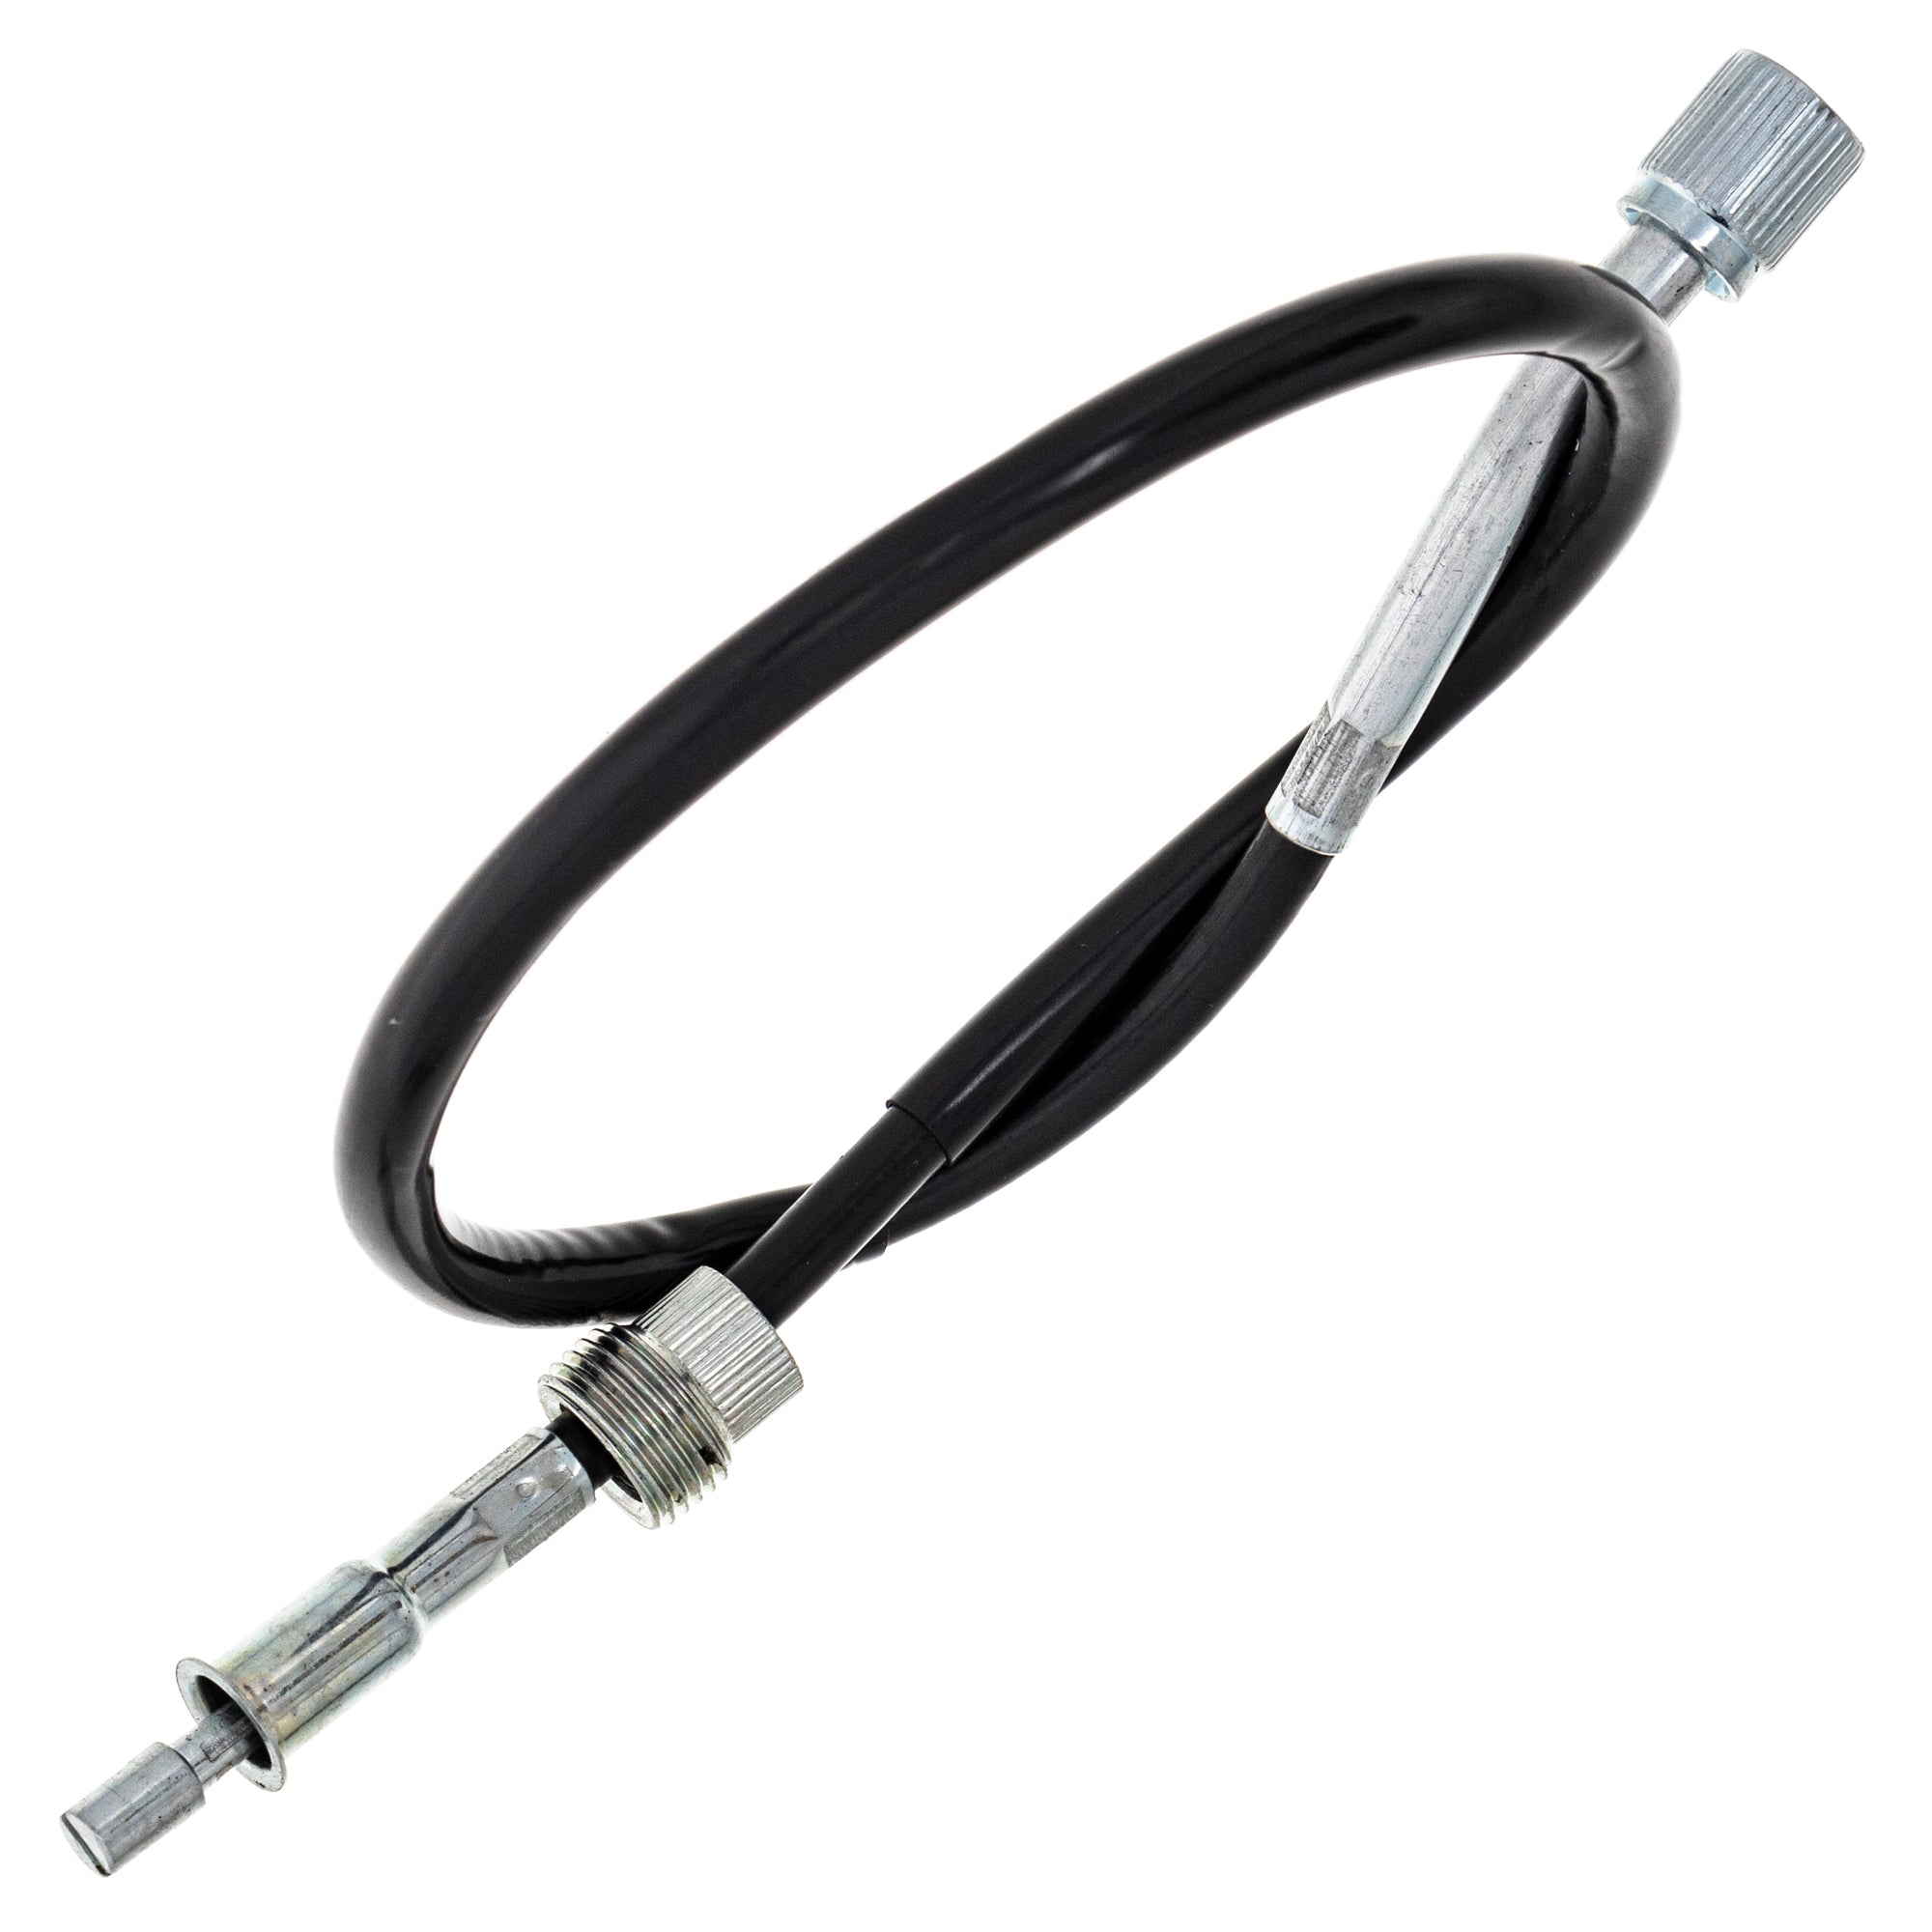 Tachometer Cable for Suzuki GS1000 GS1000E GS1000G GS1000GL